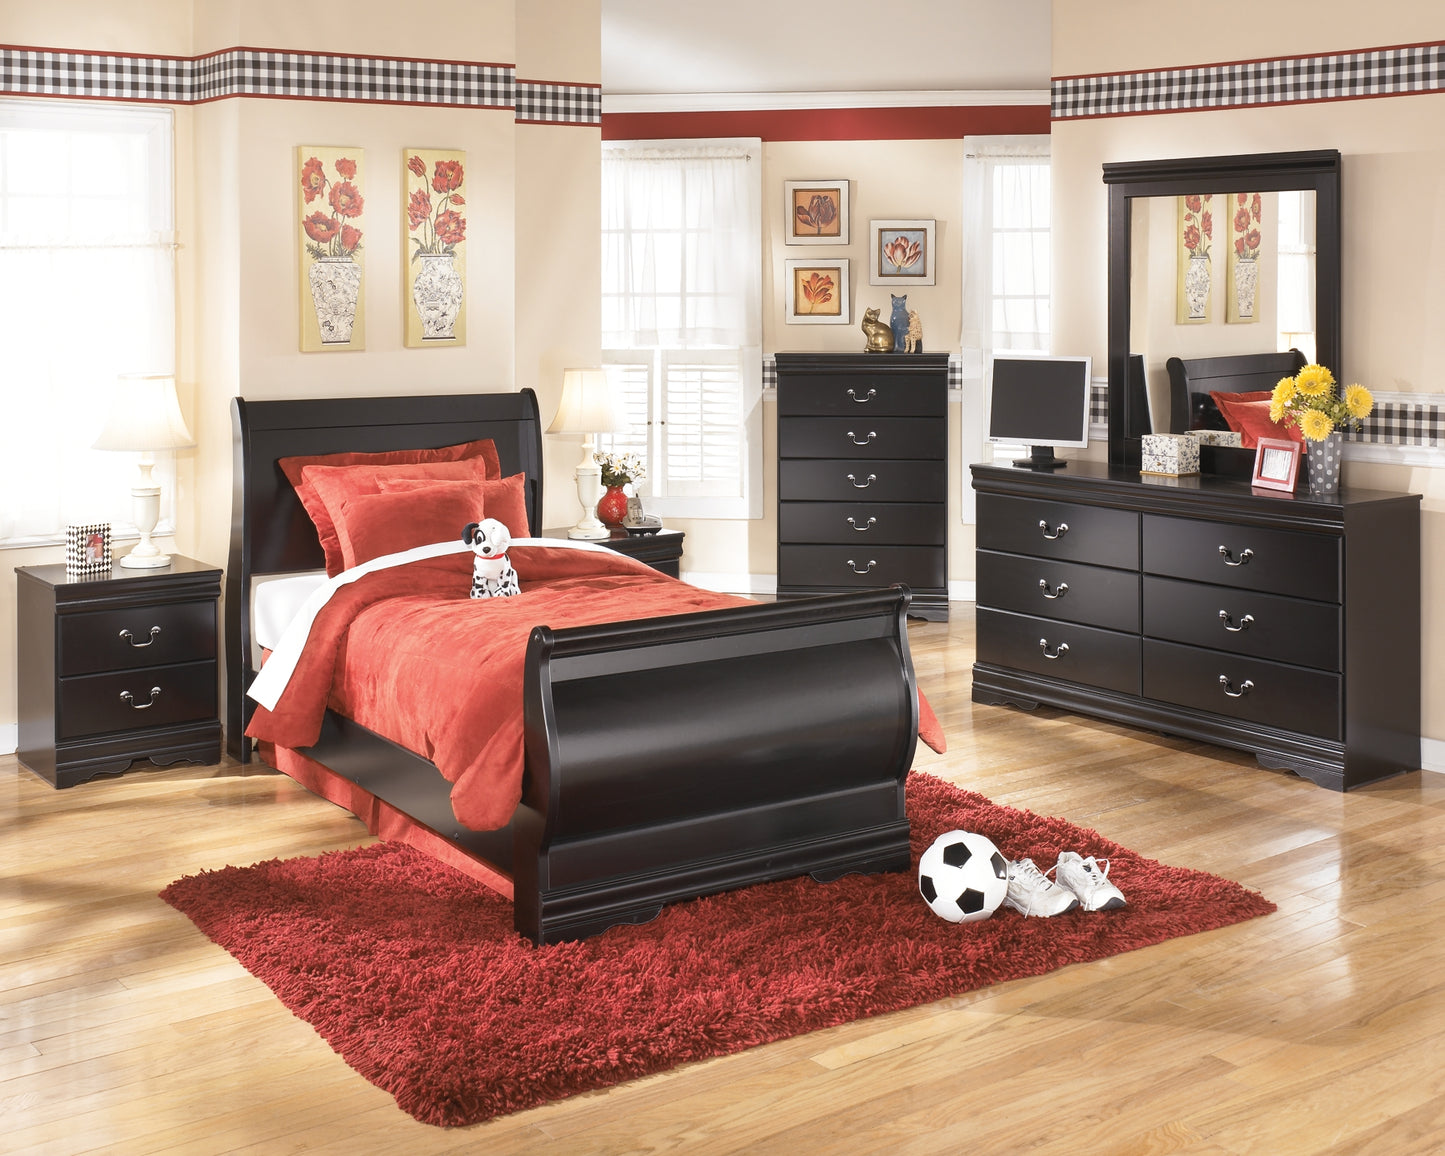 Ashley Express - Huey Vineyard Queen Sleigh Bed Wilson Furniture (OH)  in Bridgeport, Ohio. Serving Bridgeport, Yorkville, Bellaire, & Avondale